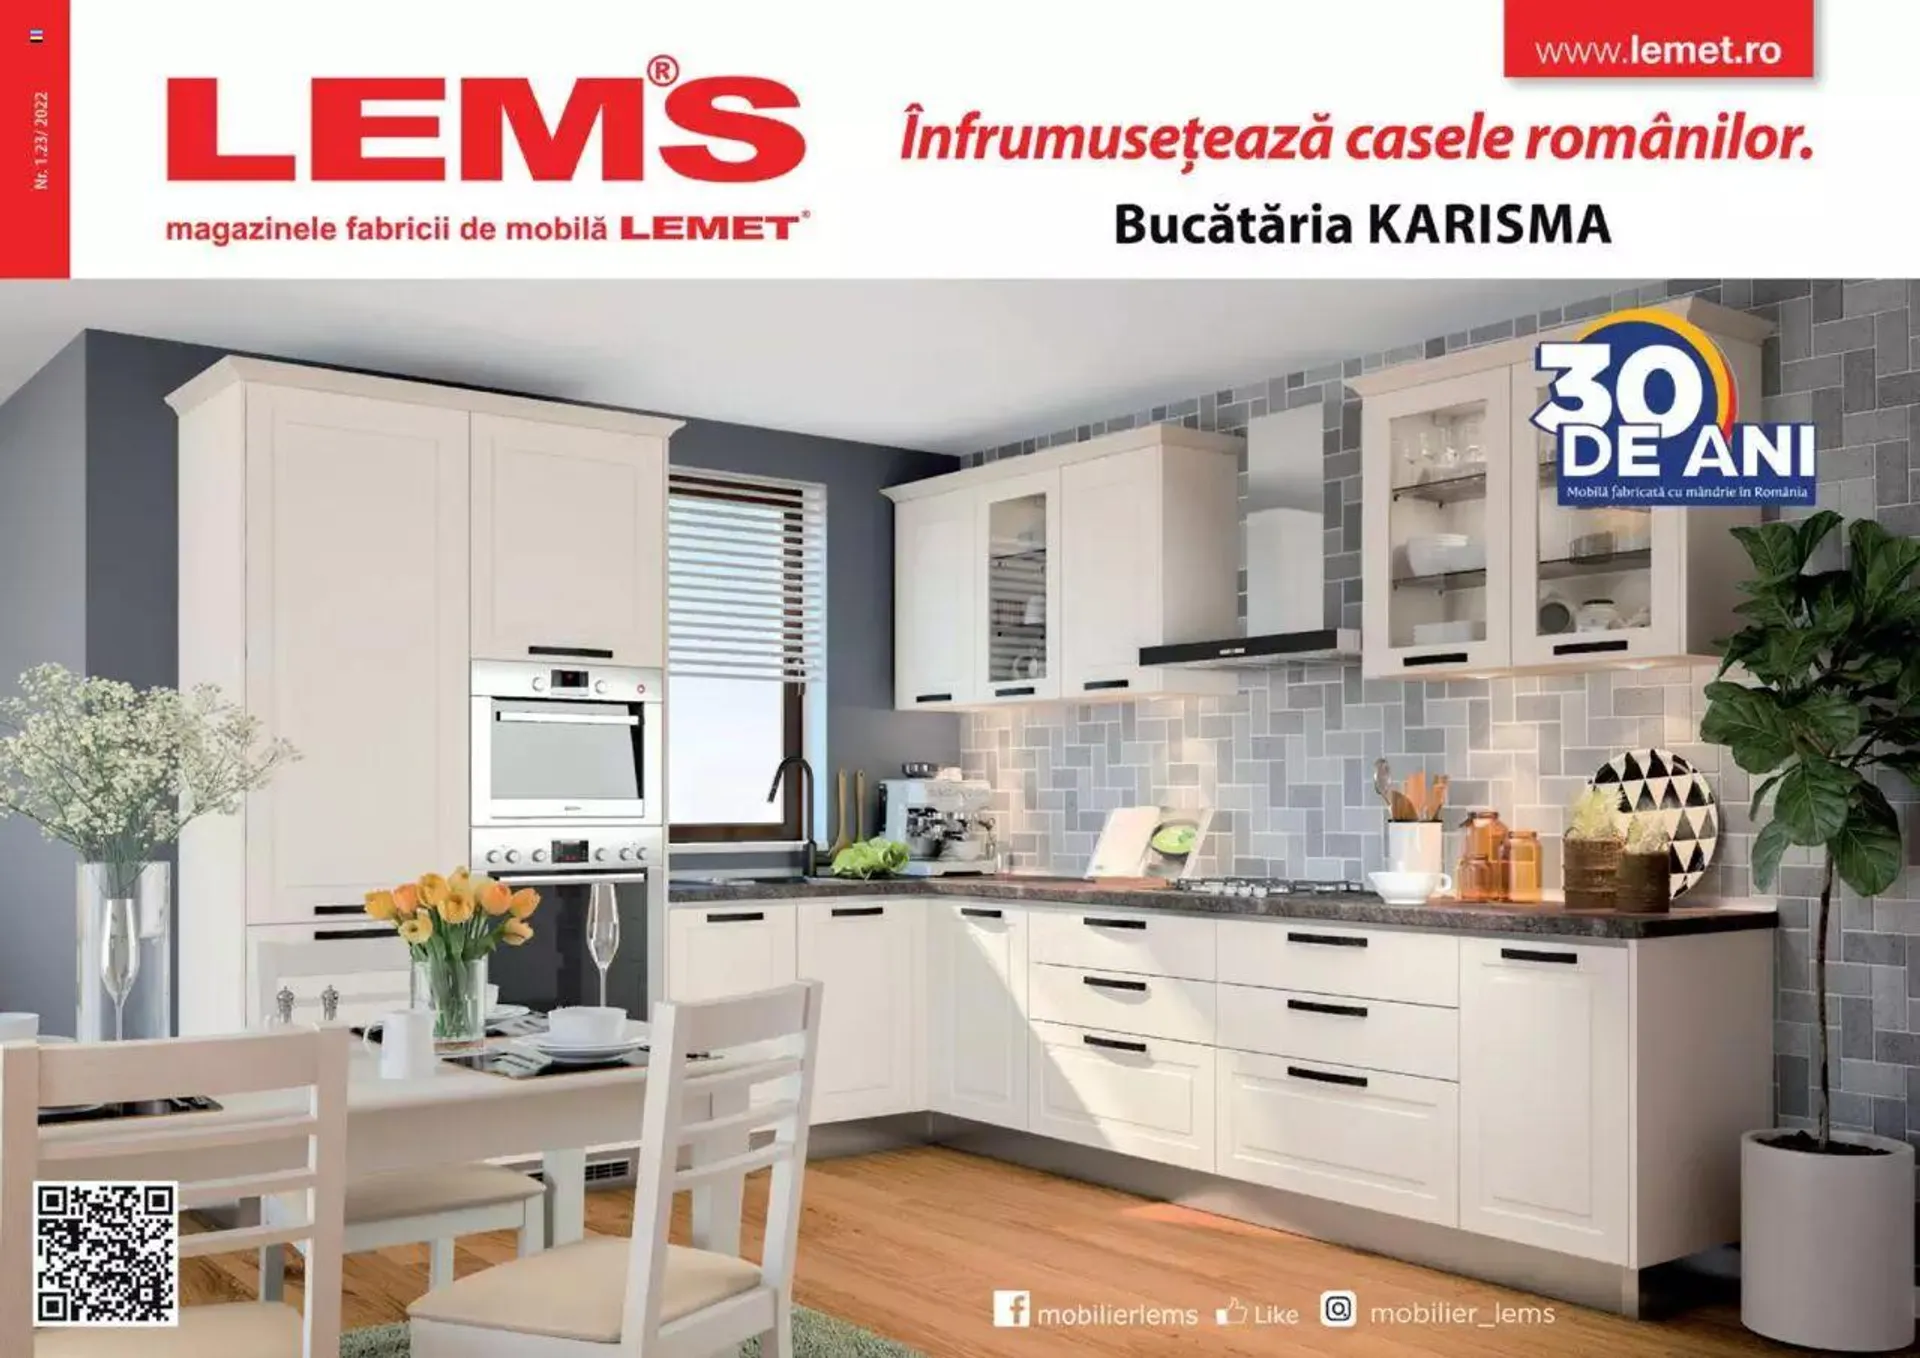 Lem’s - Bucătăria Karisma - 0